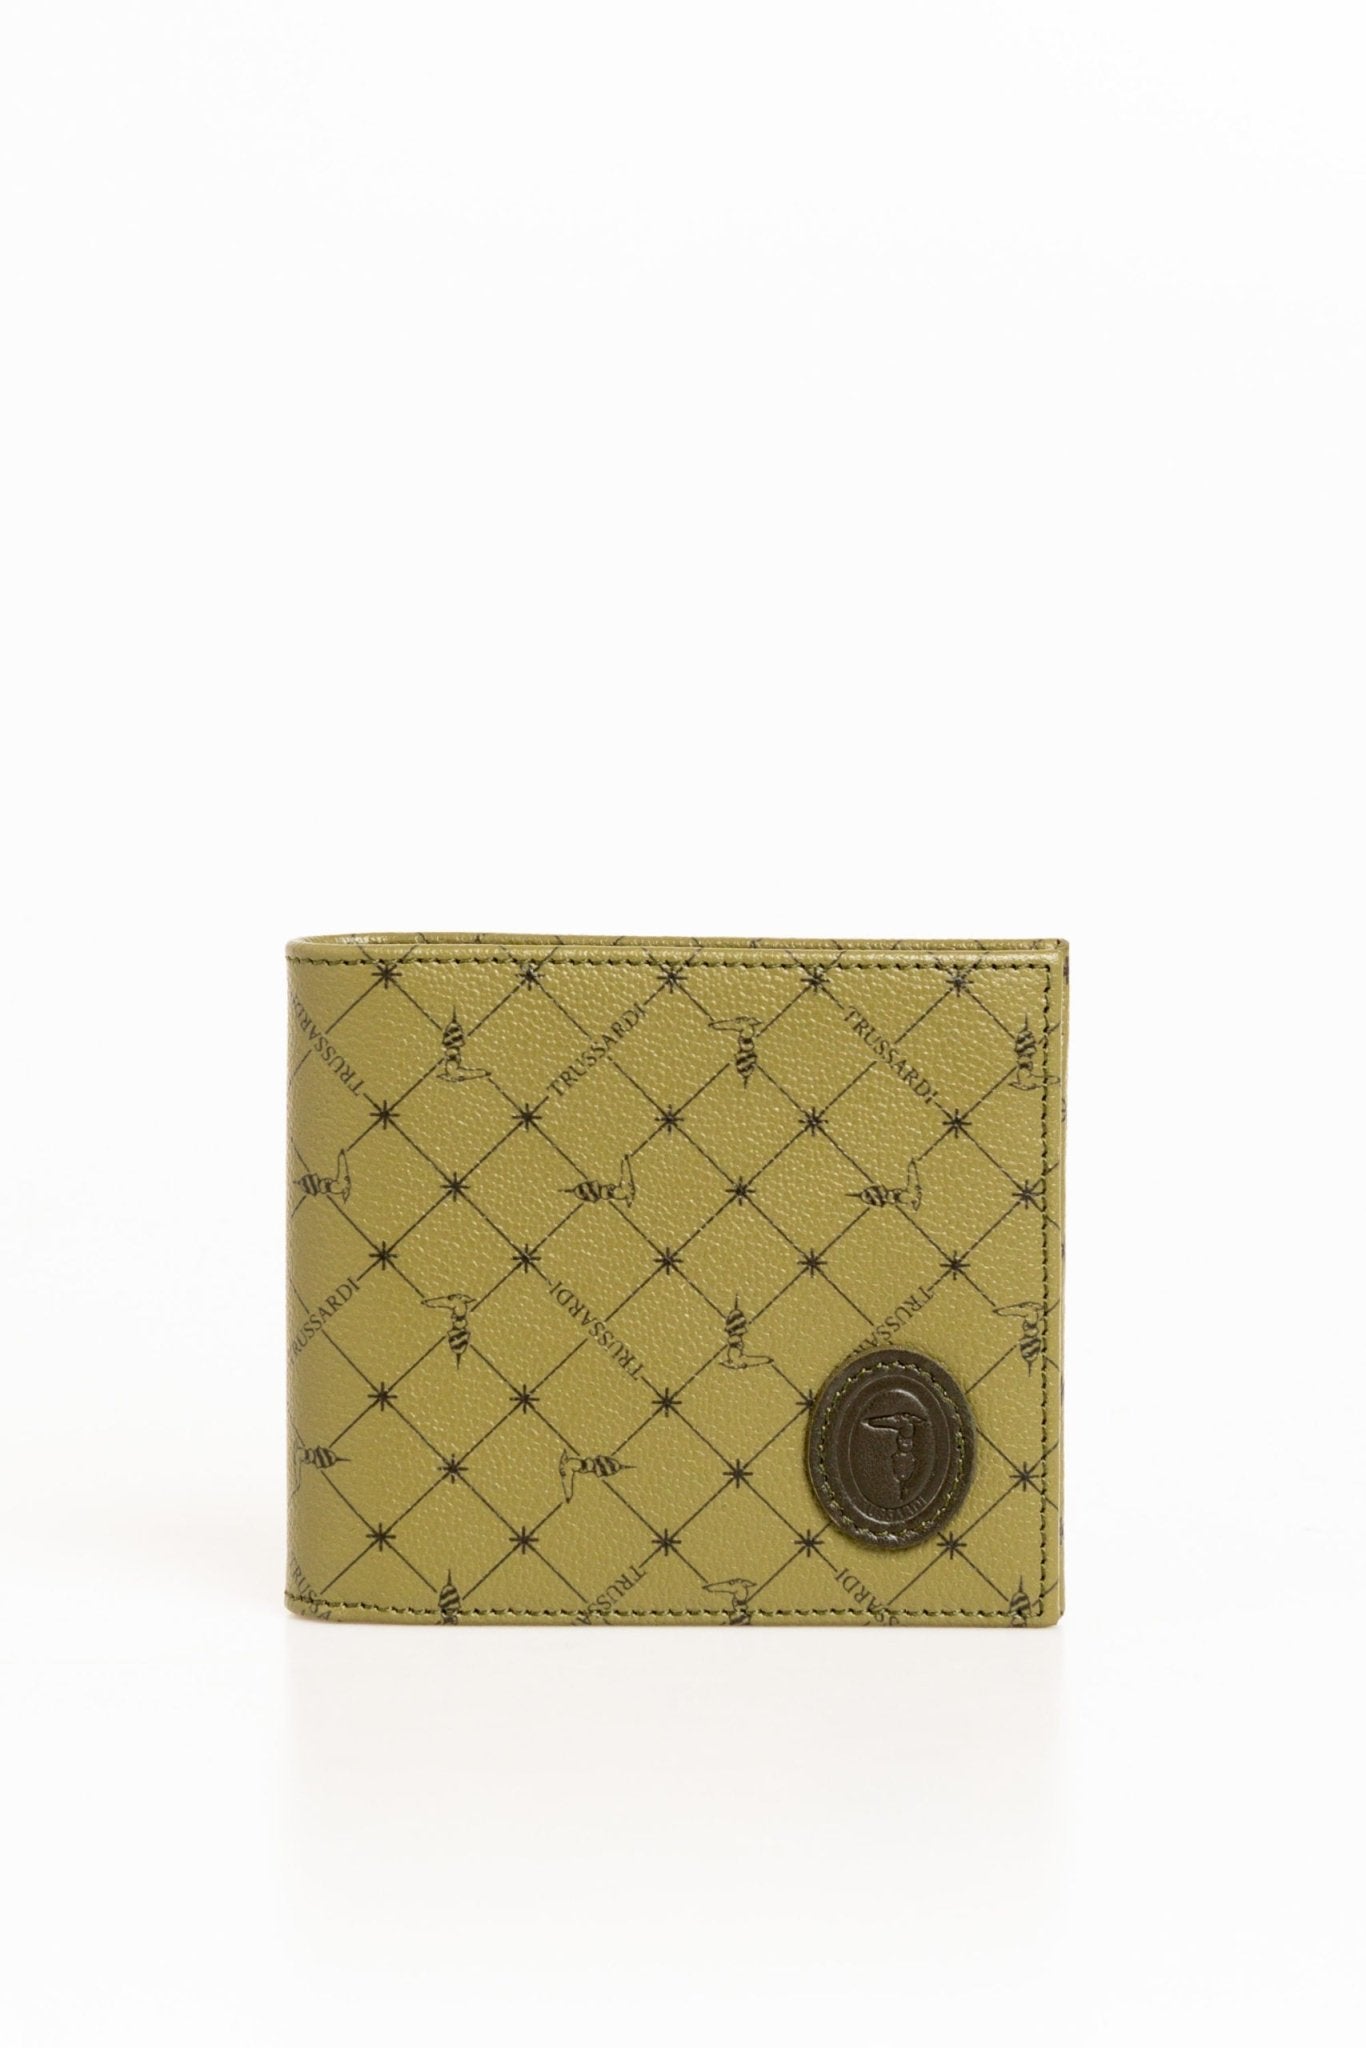 Trussardi Green Leather Wallet - Fizigo